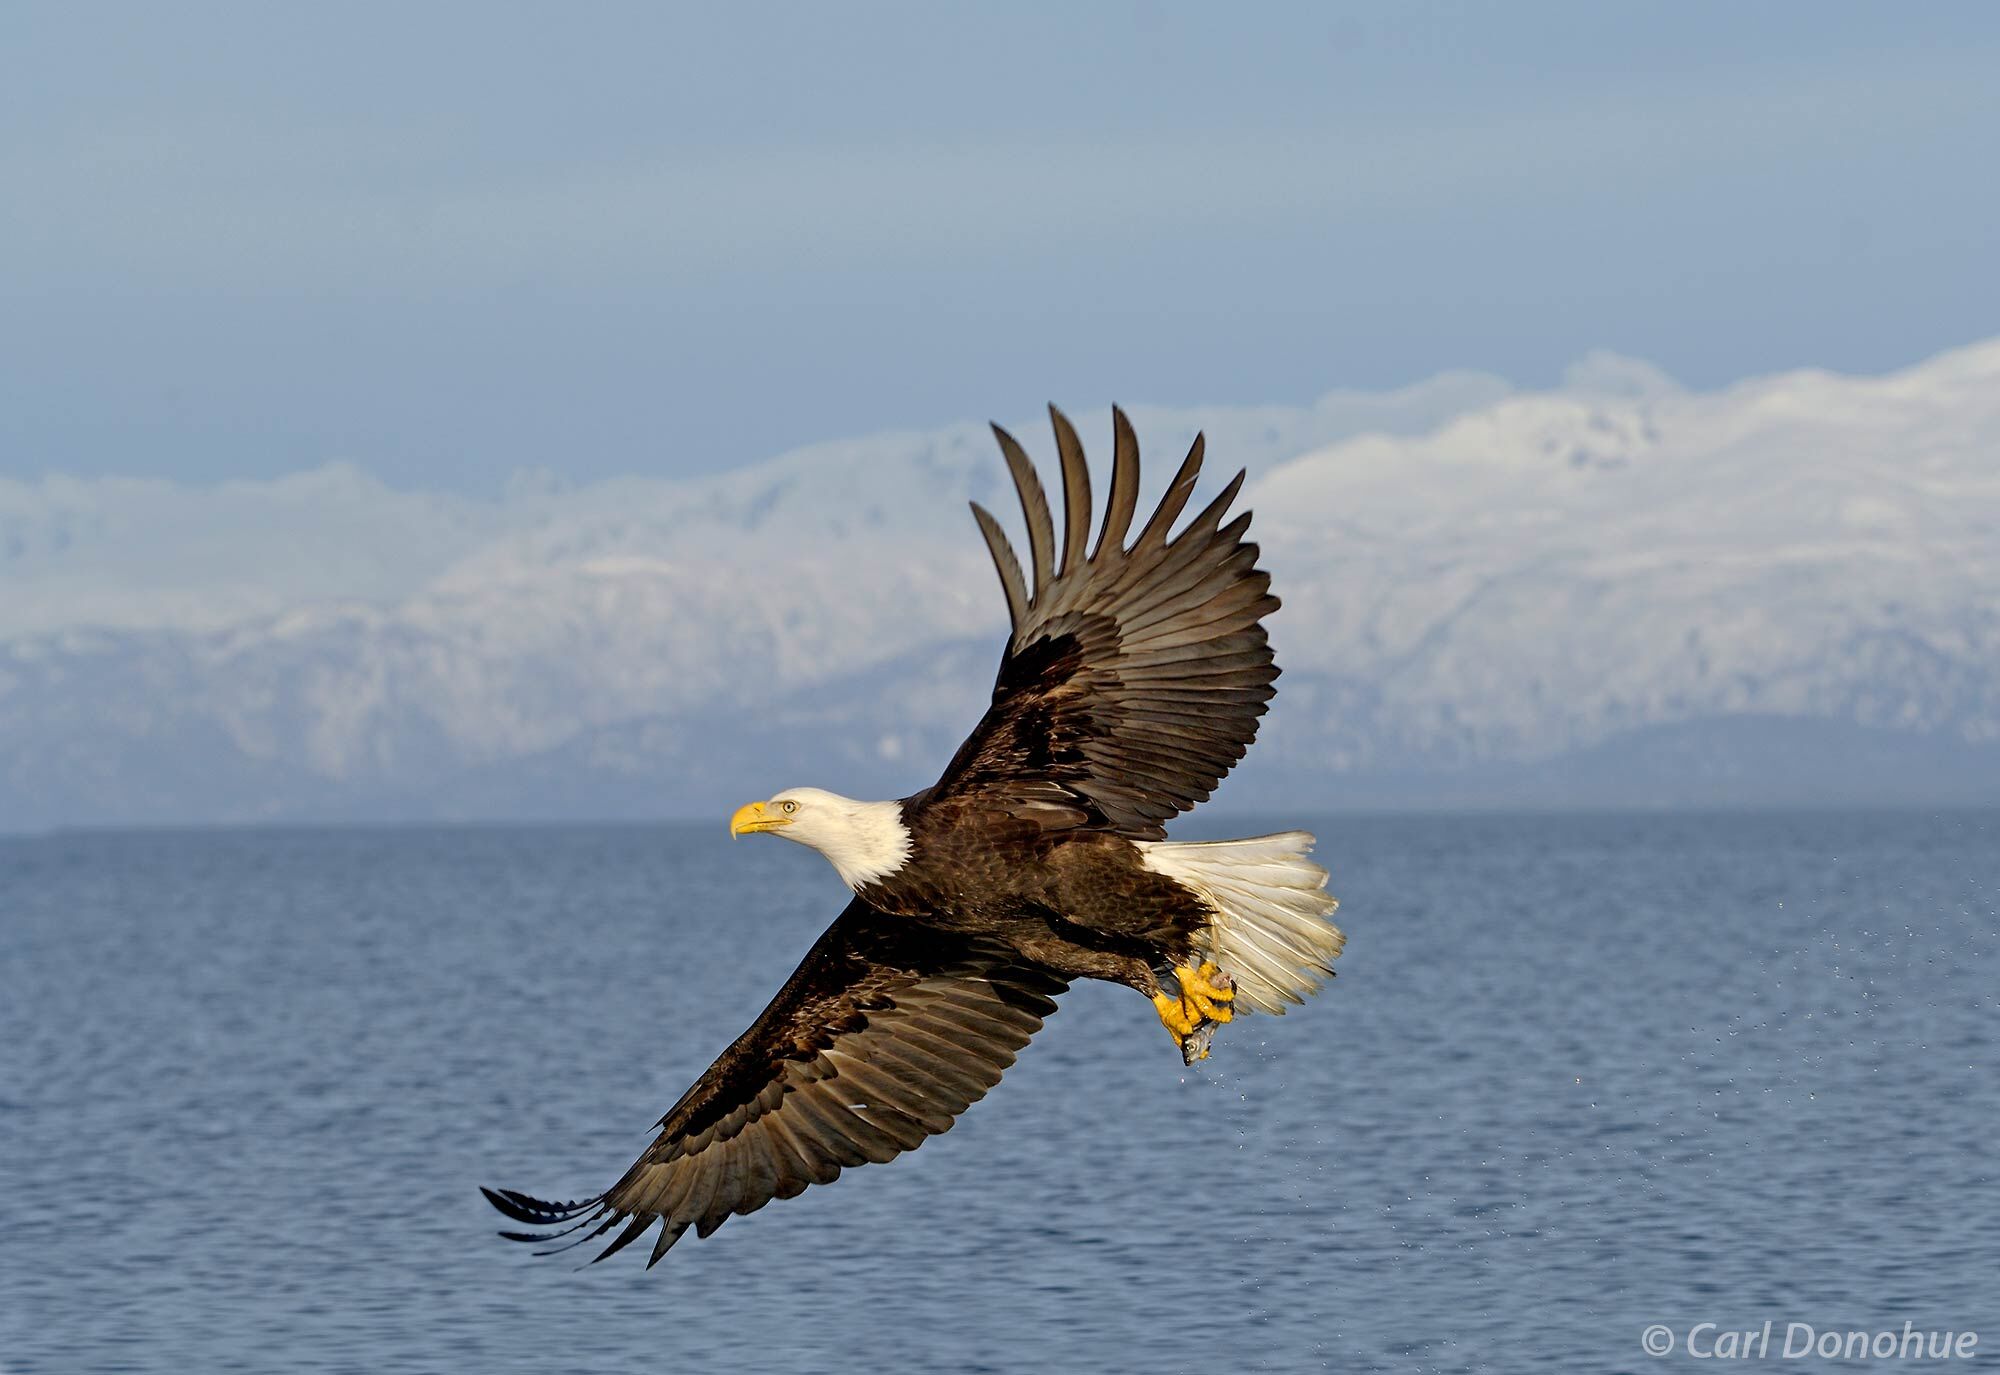 A mature bald eagle after successfully catches a fish in Kachemak Bay, Alaska. Bald eagle fishing in Kachemak Bay, near Homer...